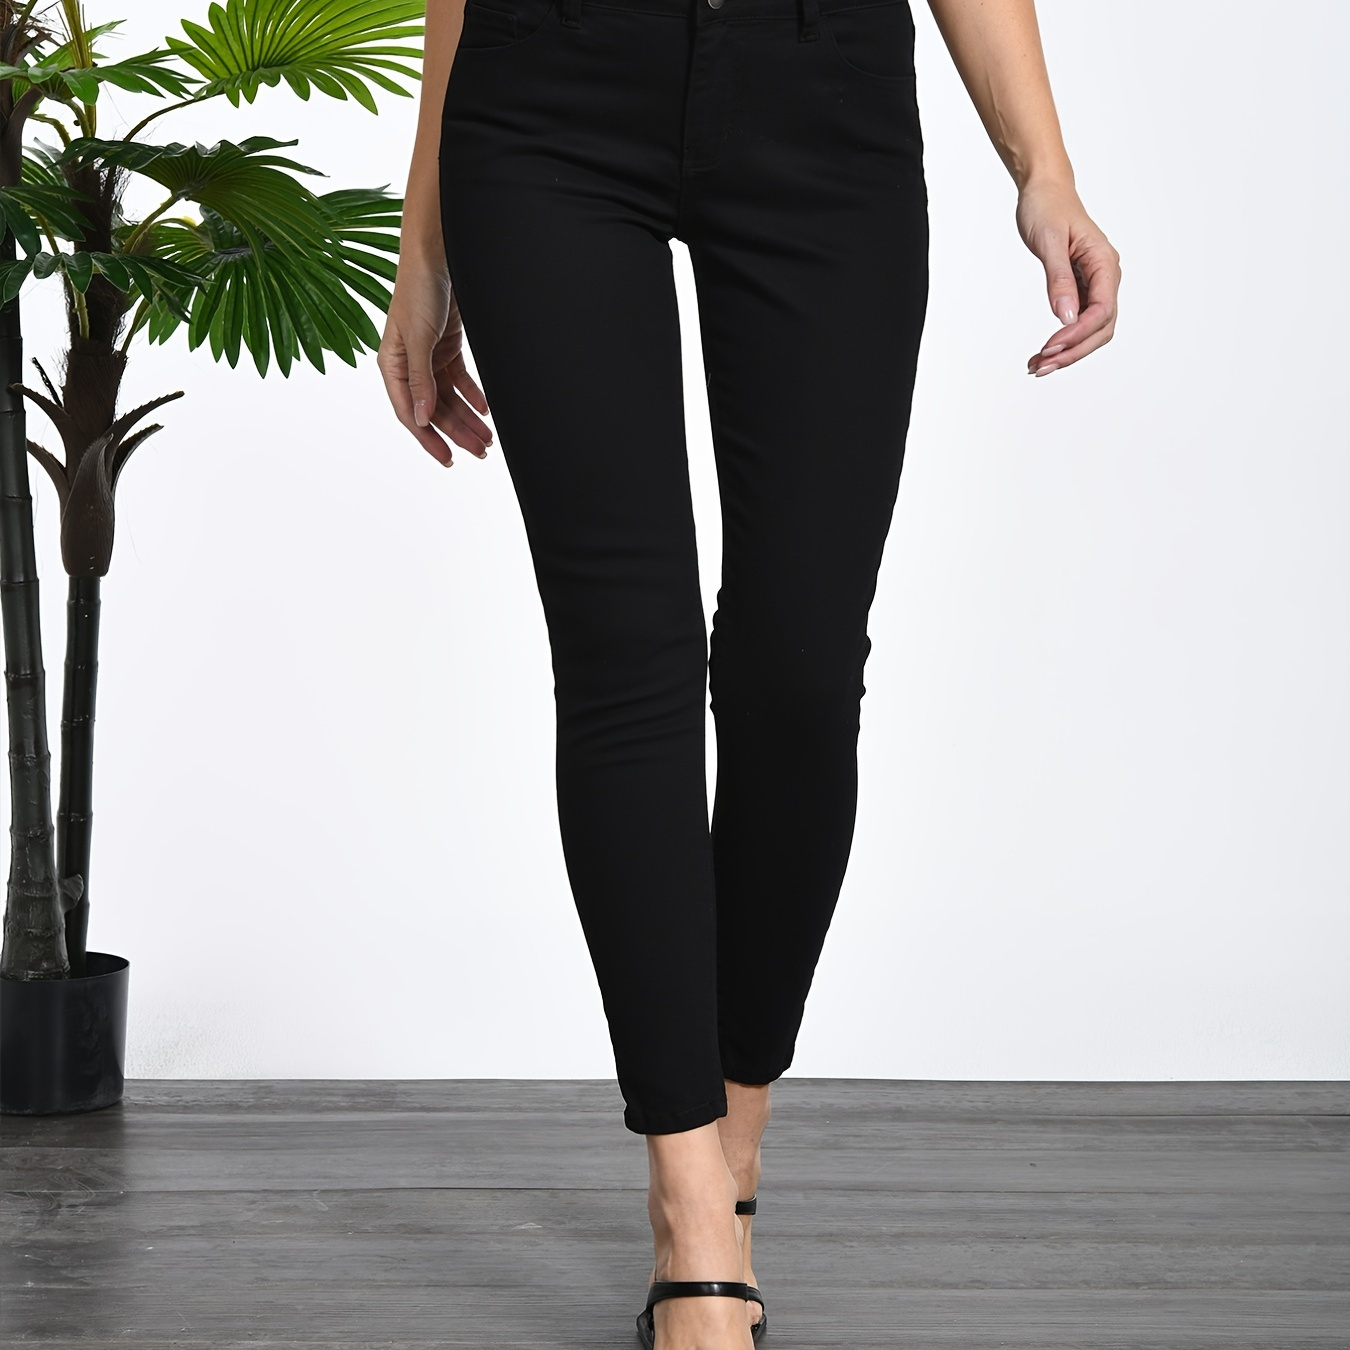 

Black Slim Fit Skinny Jeans, Slash Pockets High-stretch Ankle Length Denim Pants, Women's Denim Jeans & Clothing